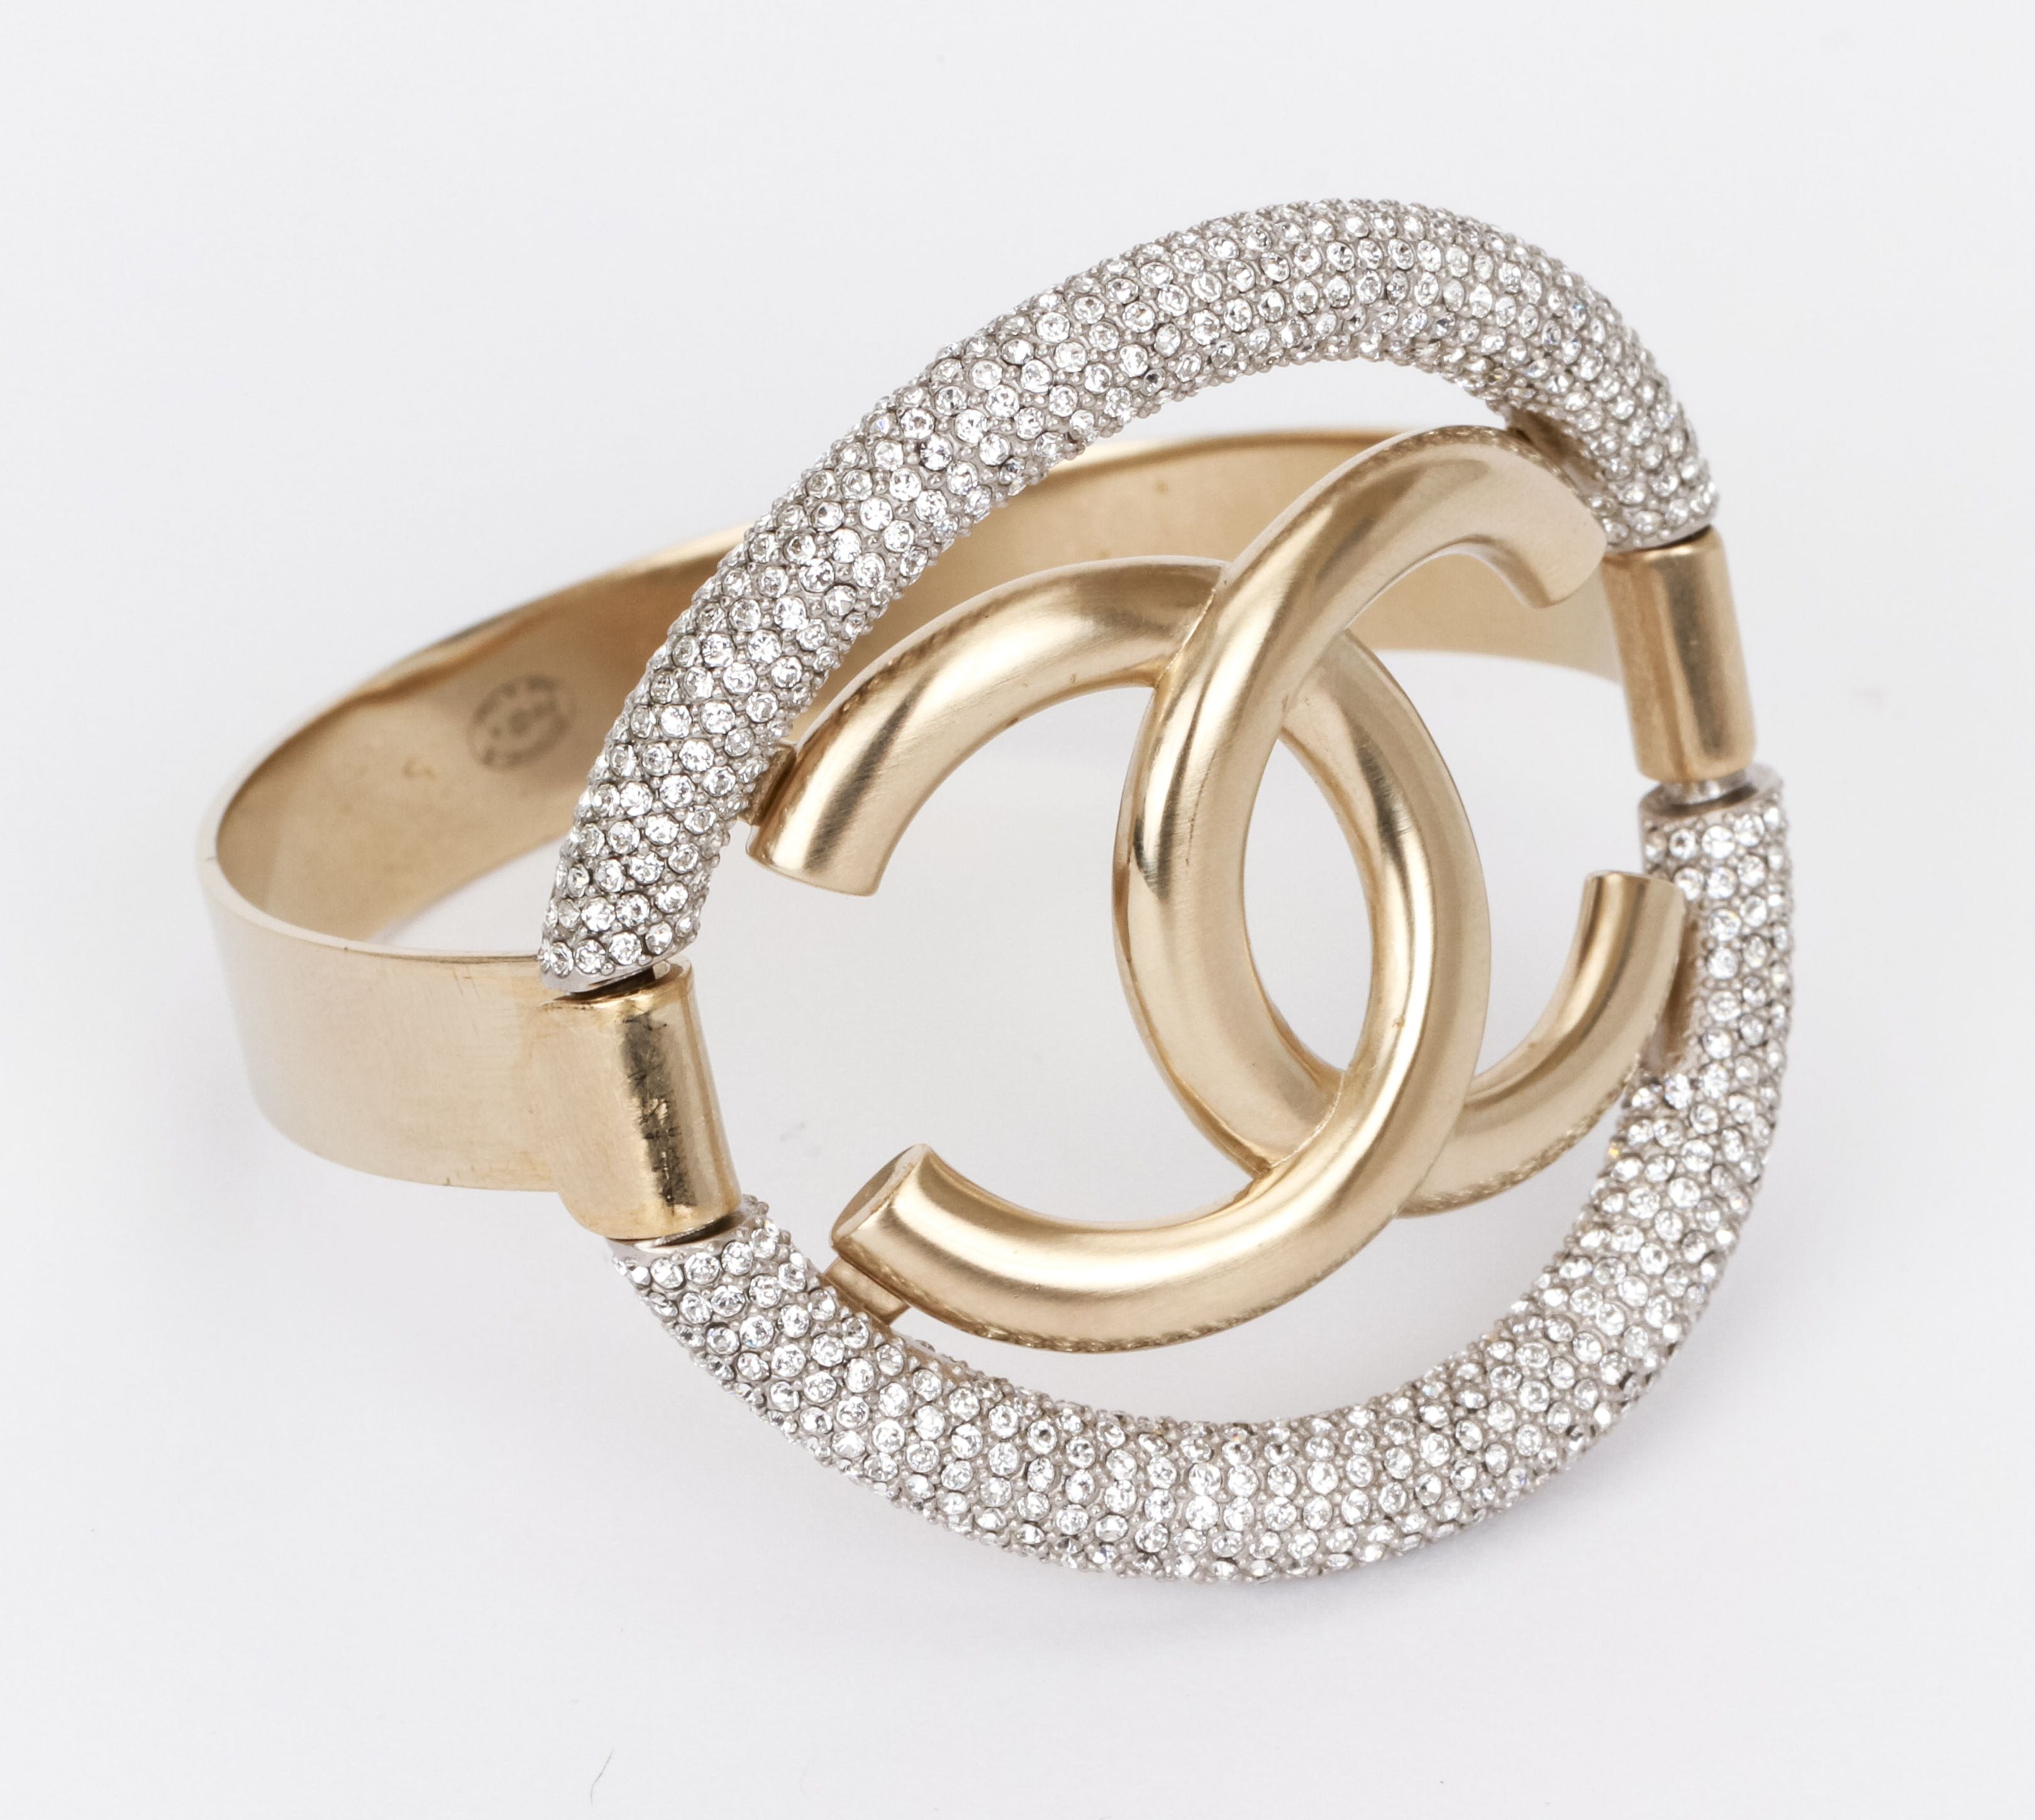 Chanel & love bracelet  Love bracelets, Cartier love, Cartier